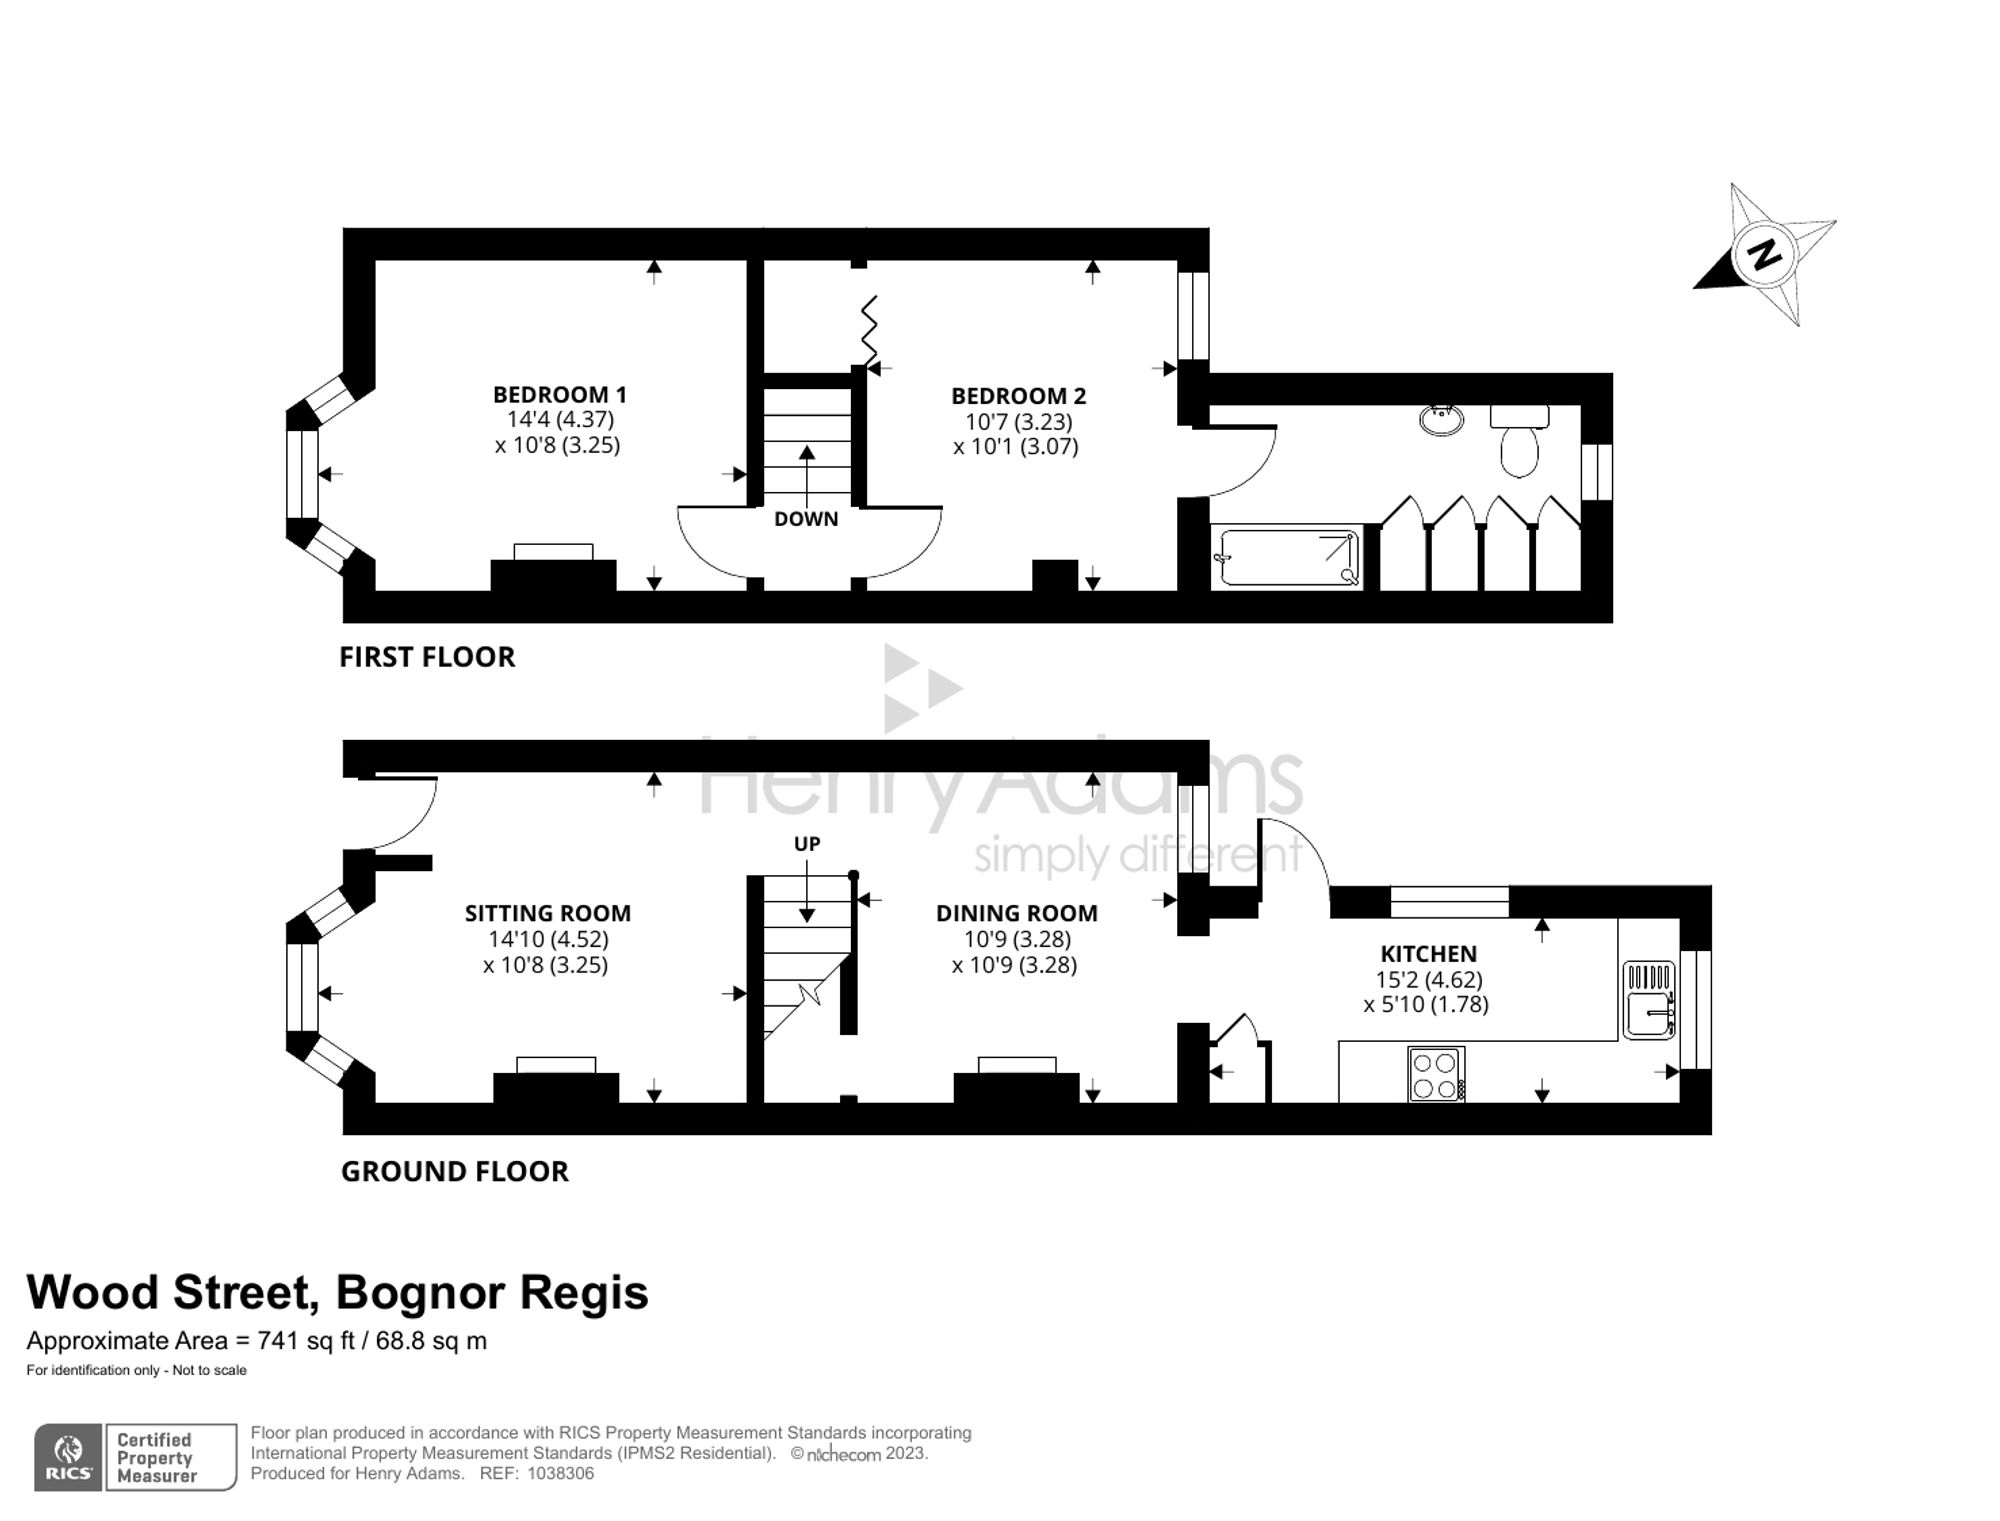 Wood Street, Bognor Regis floorplans